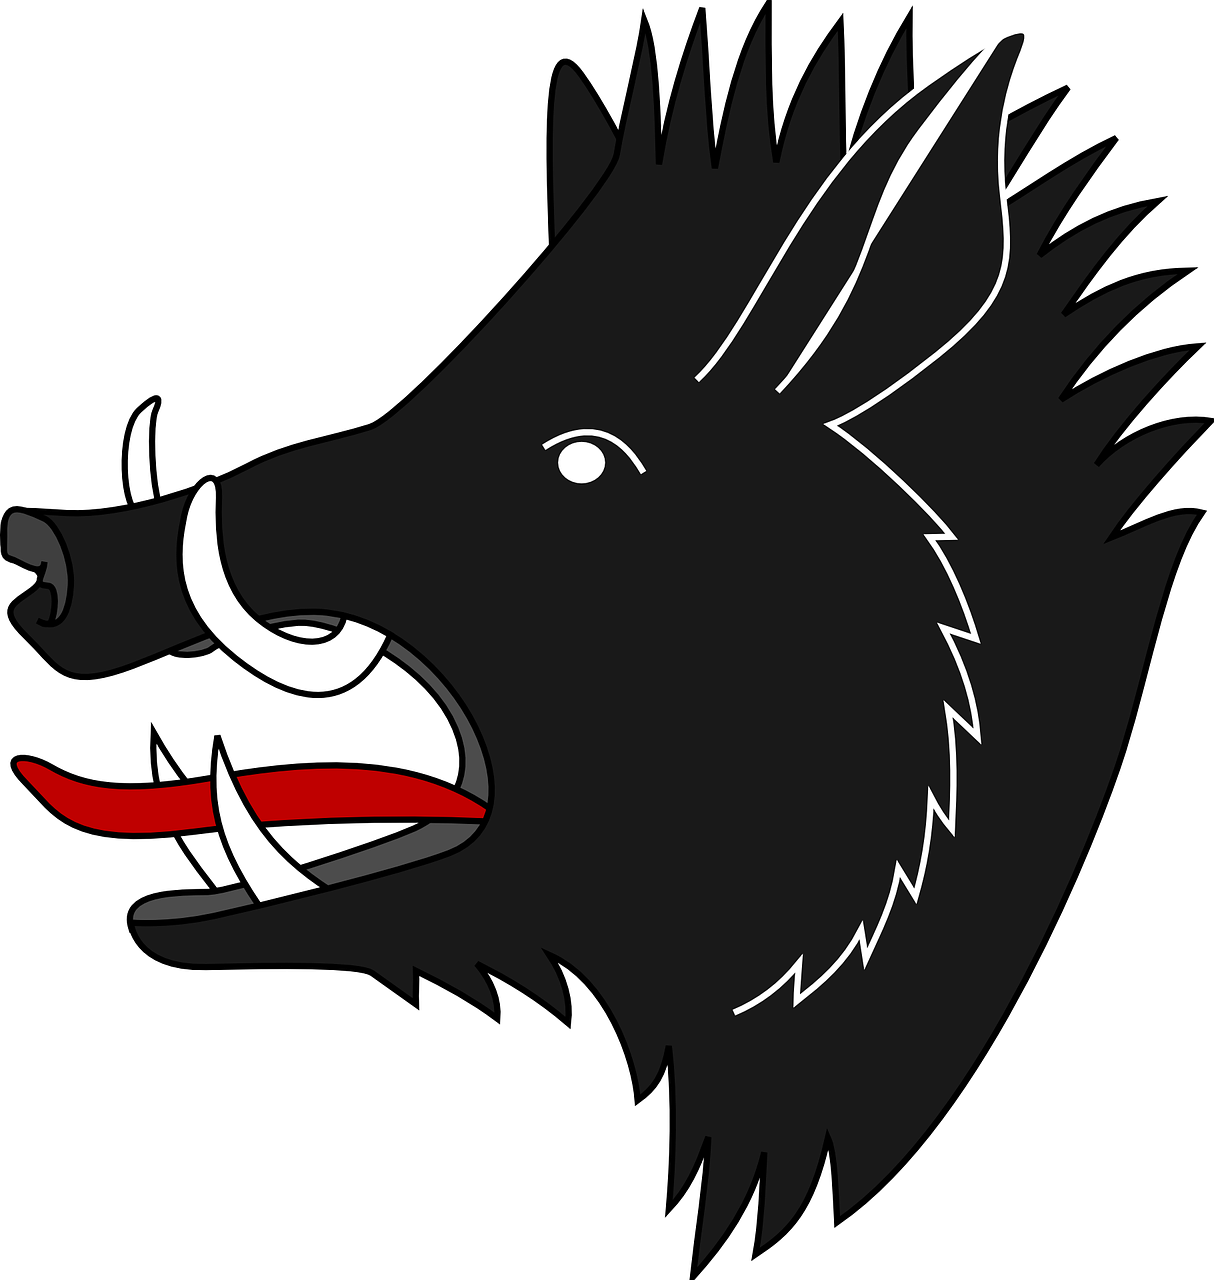 Cartoon Boar Profile Graphic PNG image